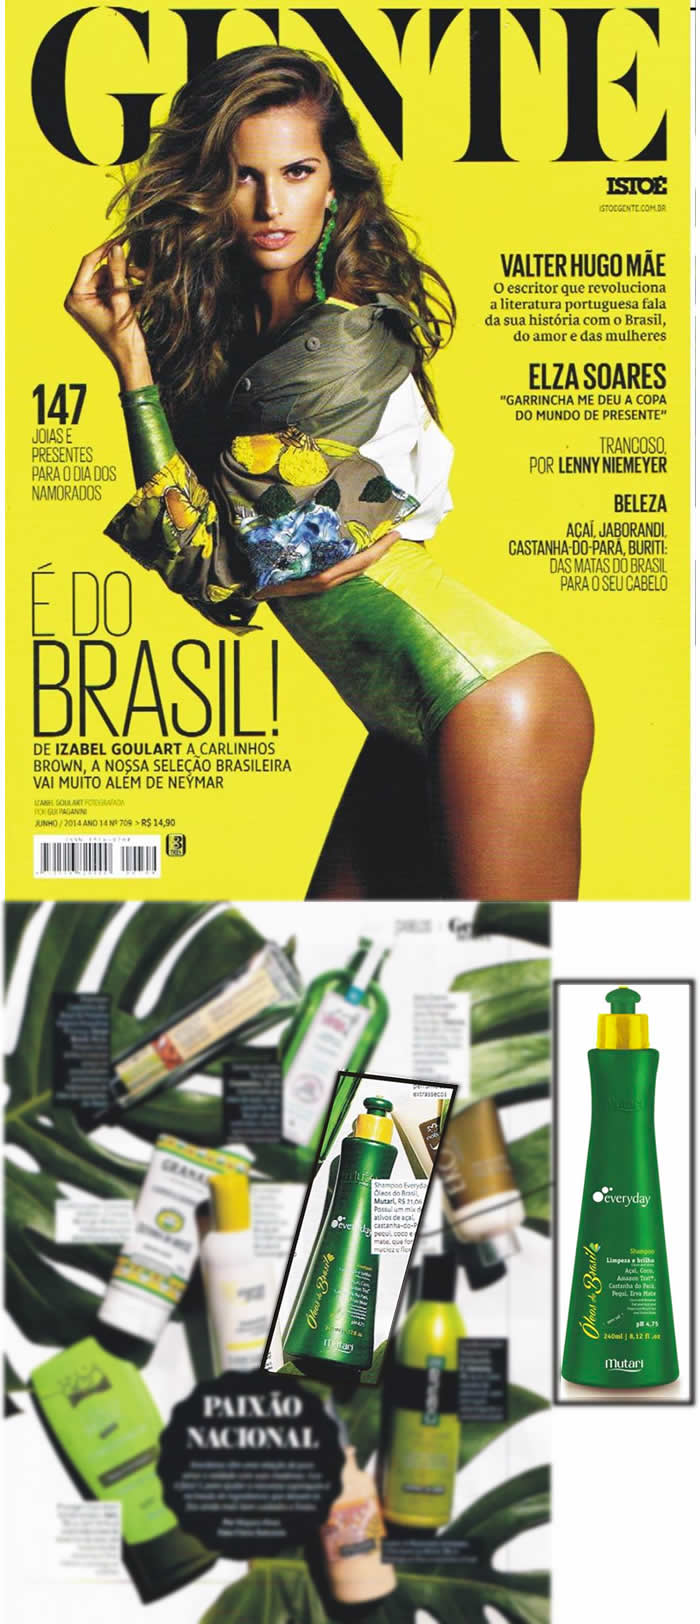 Shampoo Óleos do Brasil, da Mutari Cosméticos está entre os destaques de beleza na revista Istoé Gente